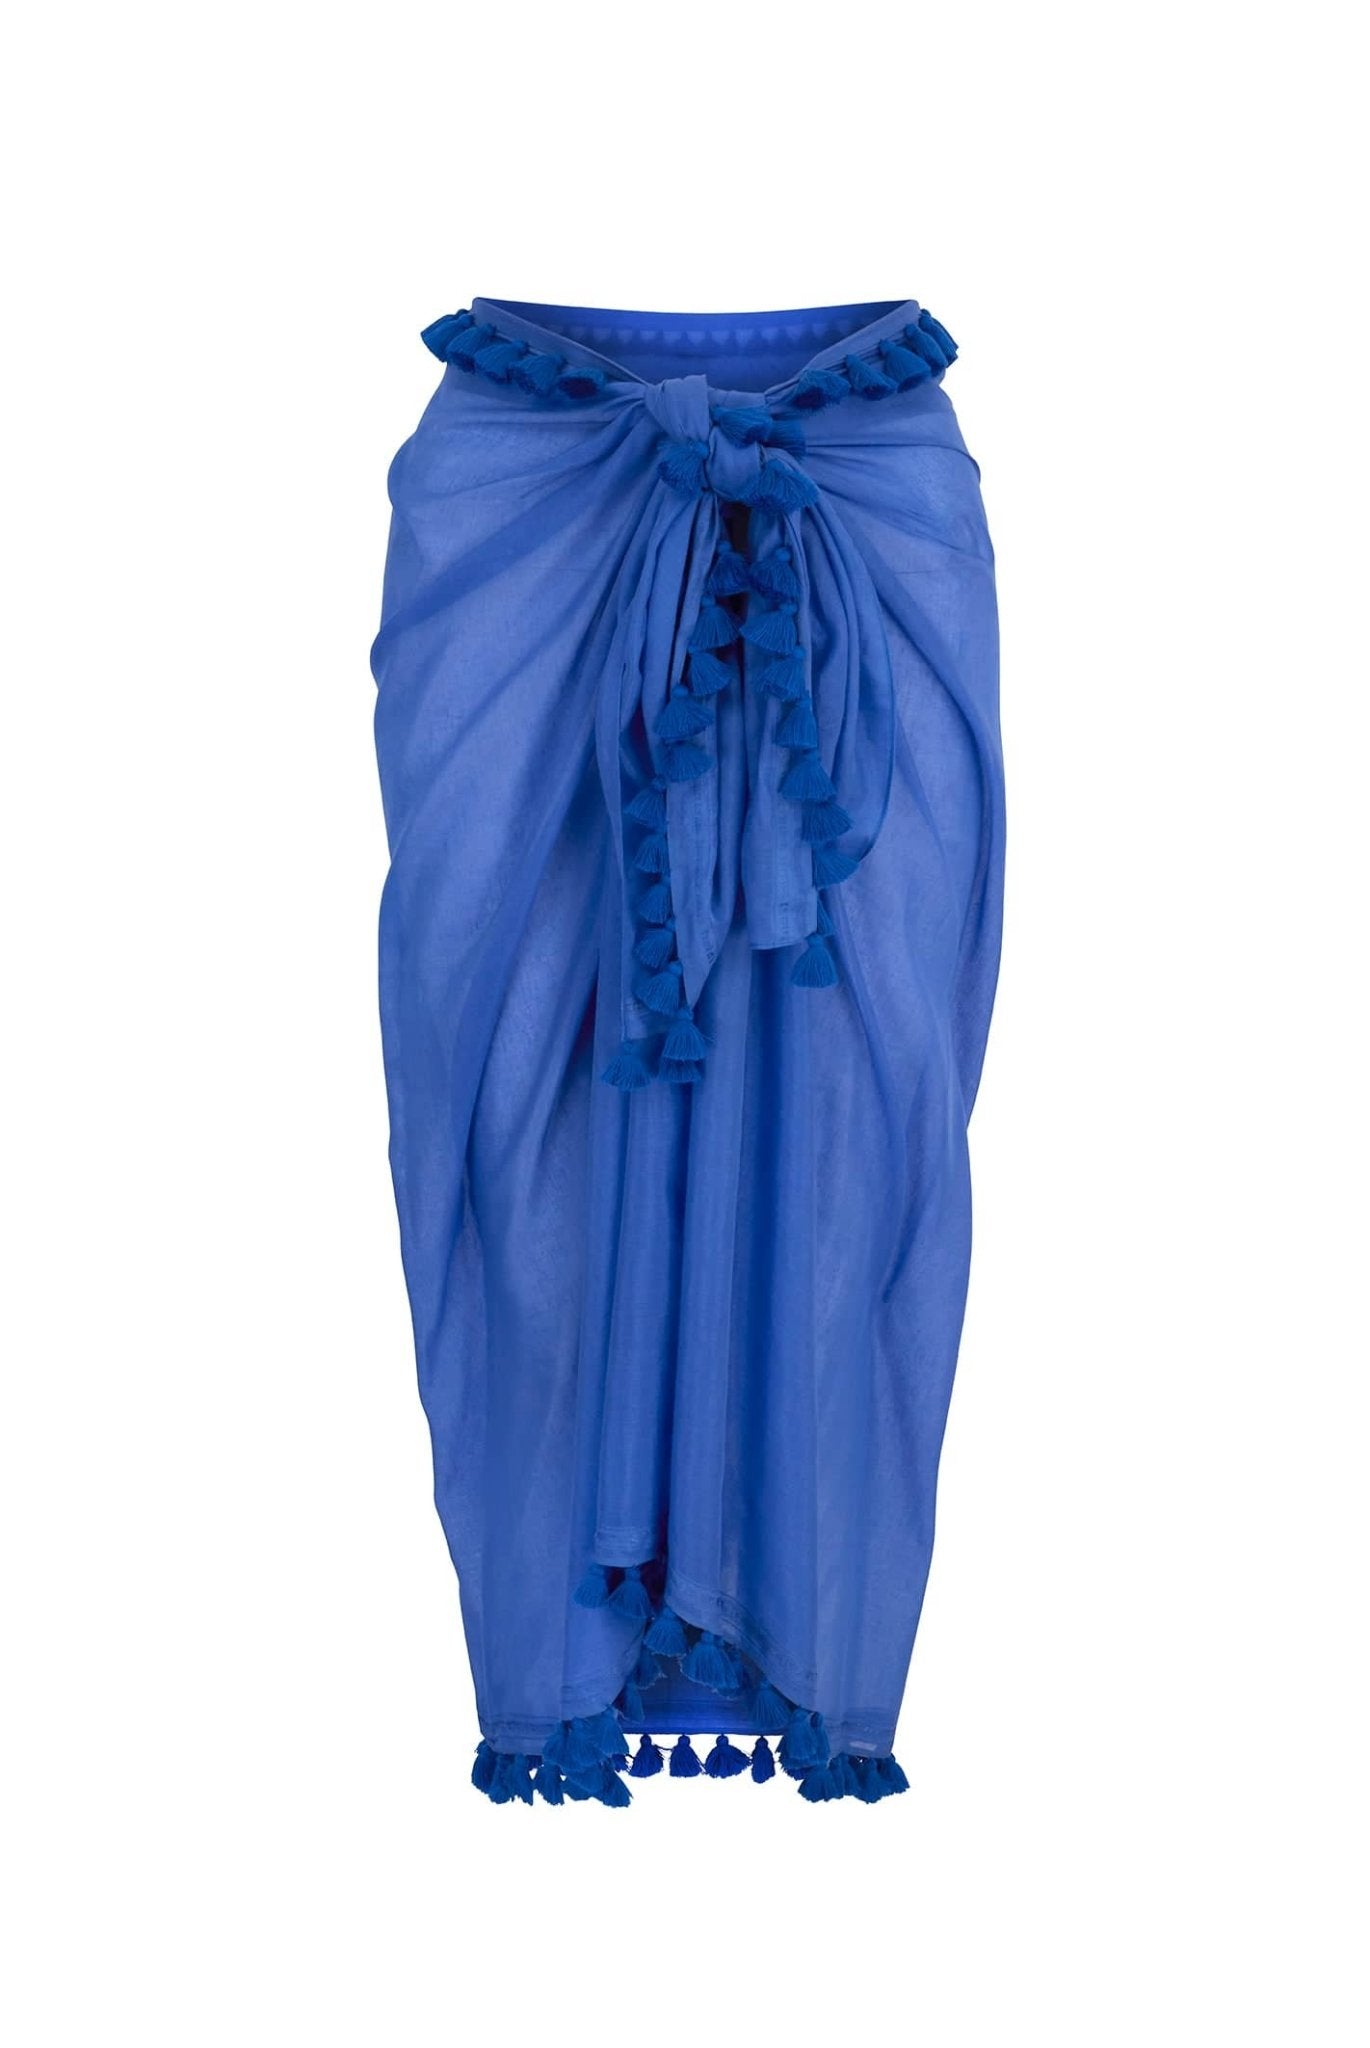 Sarong in Blue - Heidi Klein - UK Store